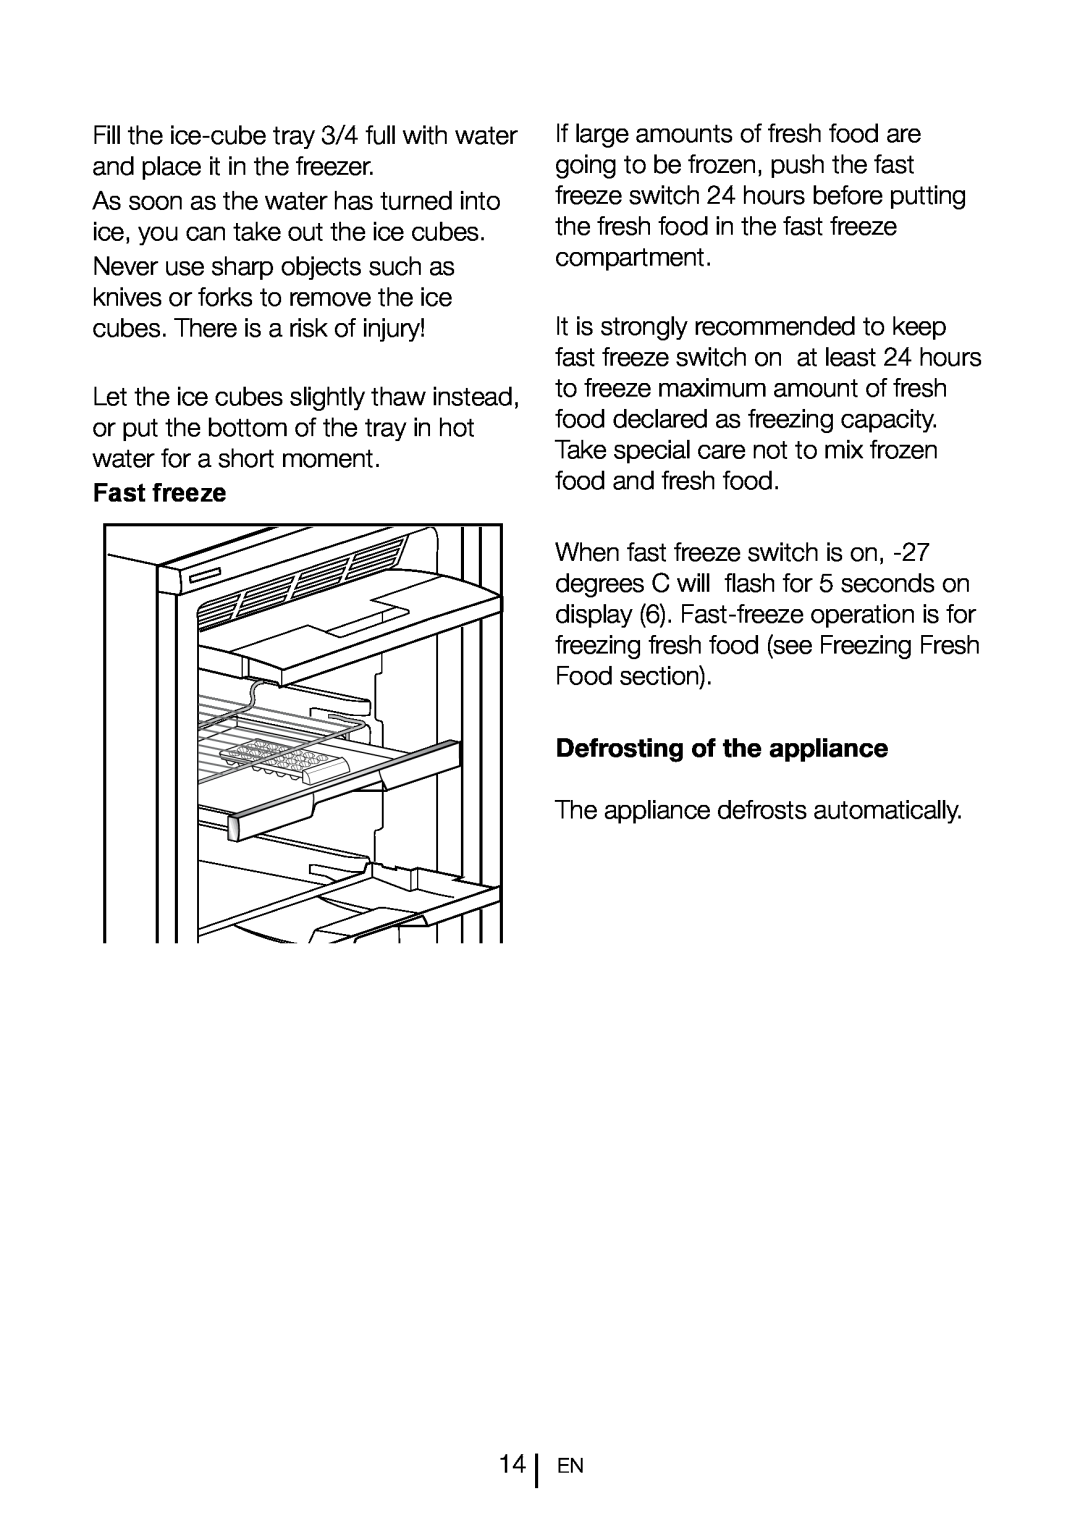 Smeg CV260PNF instruction manual Fast freeze, Defrosting of the appliance 